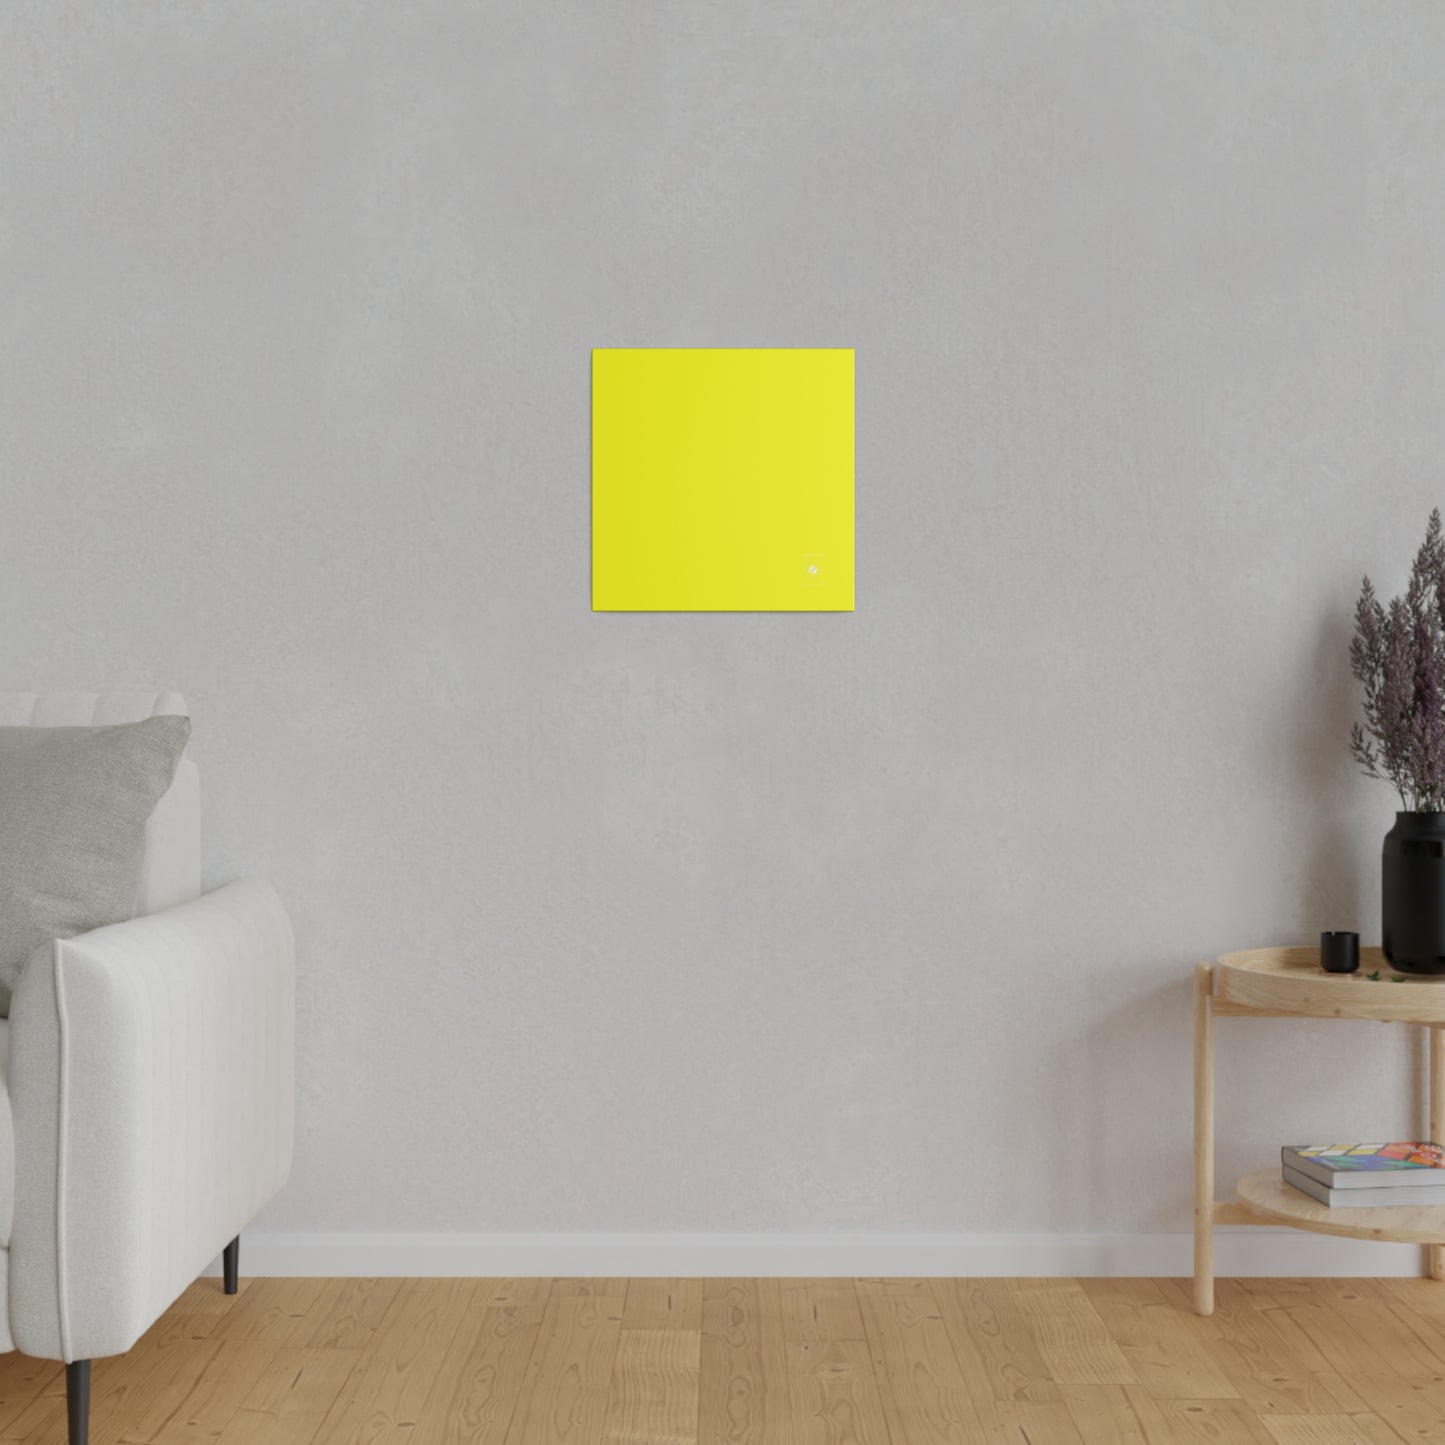 Neon Yellow FFFF00 - Art Print Canvas